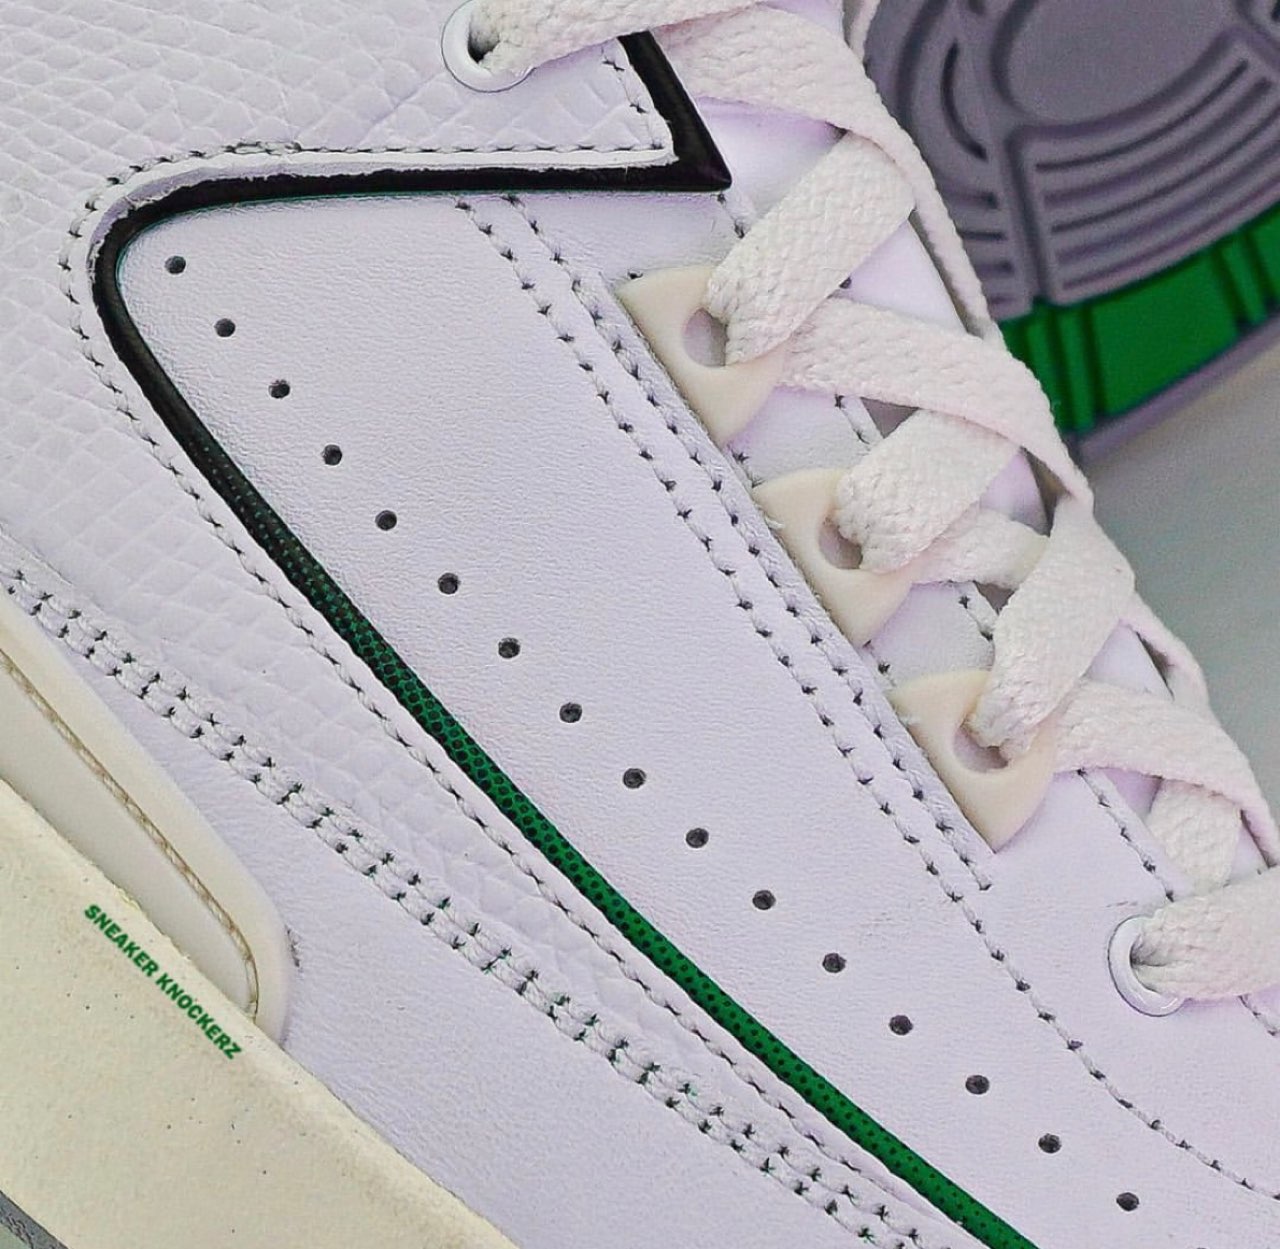 Nike Air Jordan 2 Retro “Lucky Green”が国内2月3日に発売予定